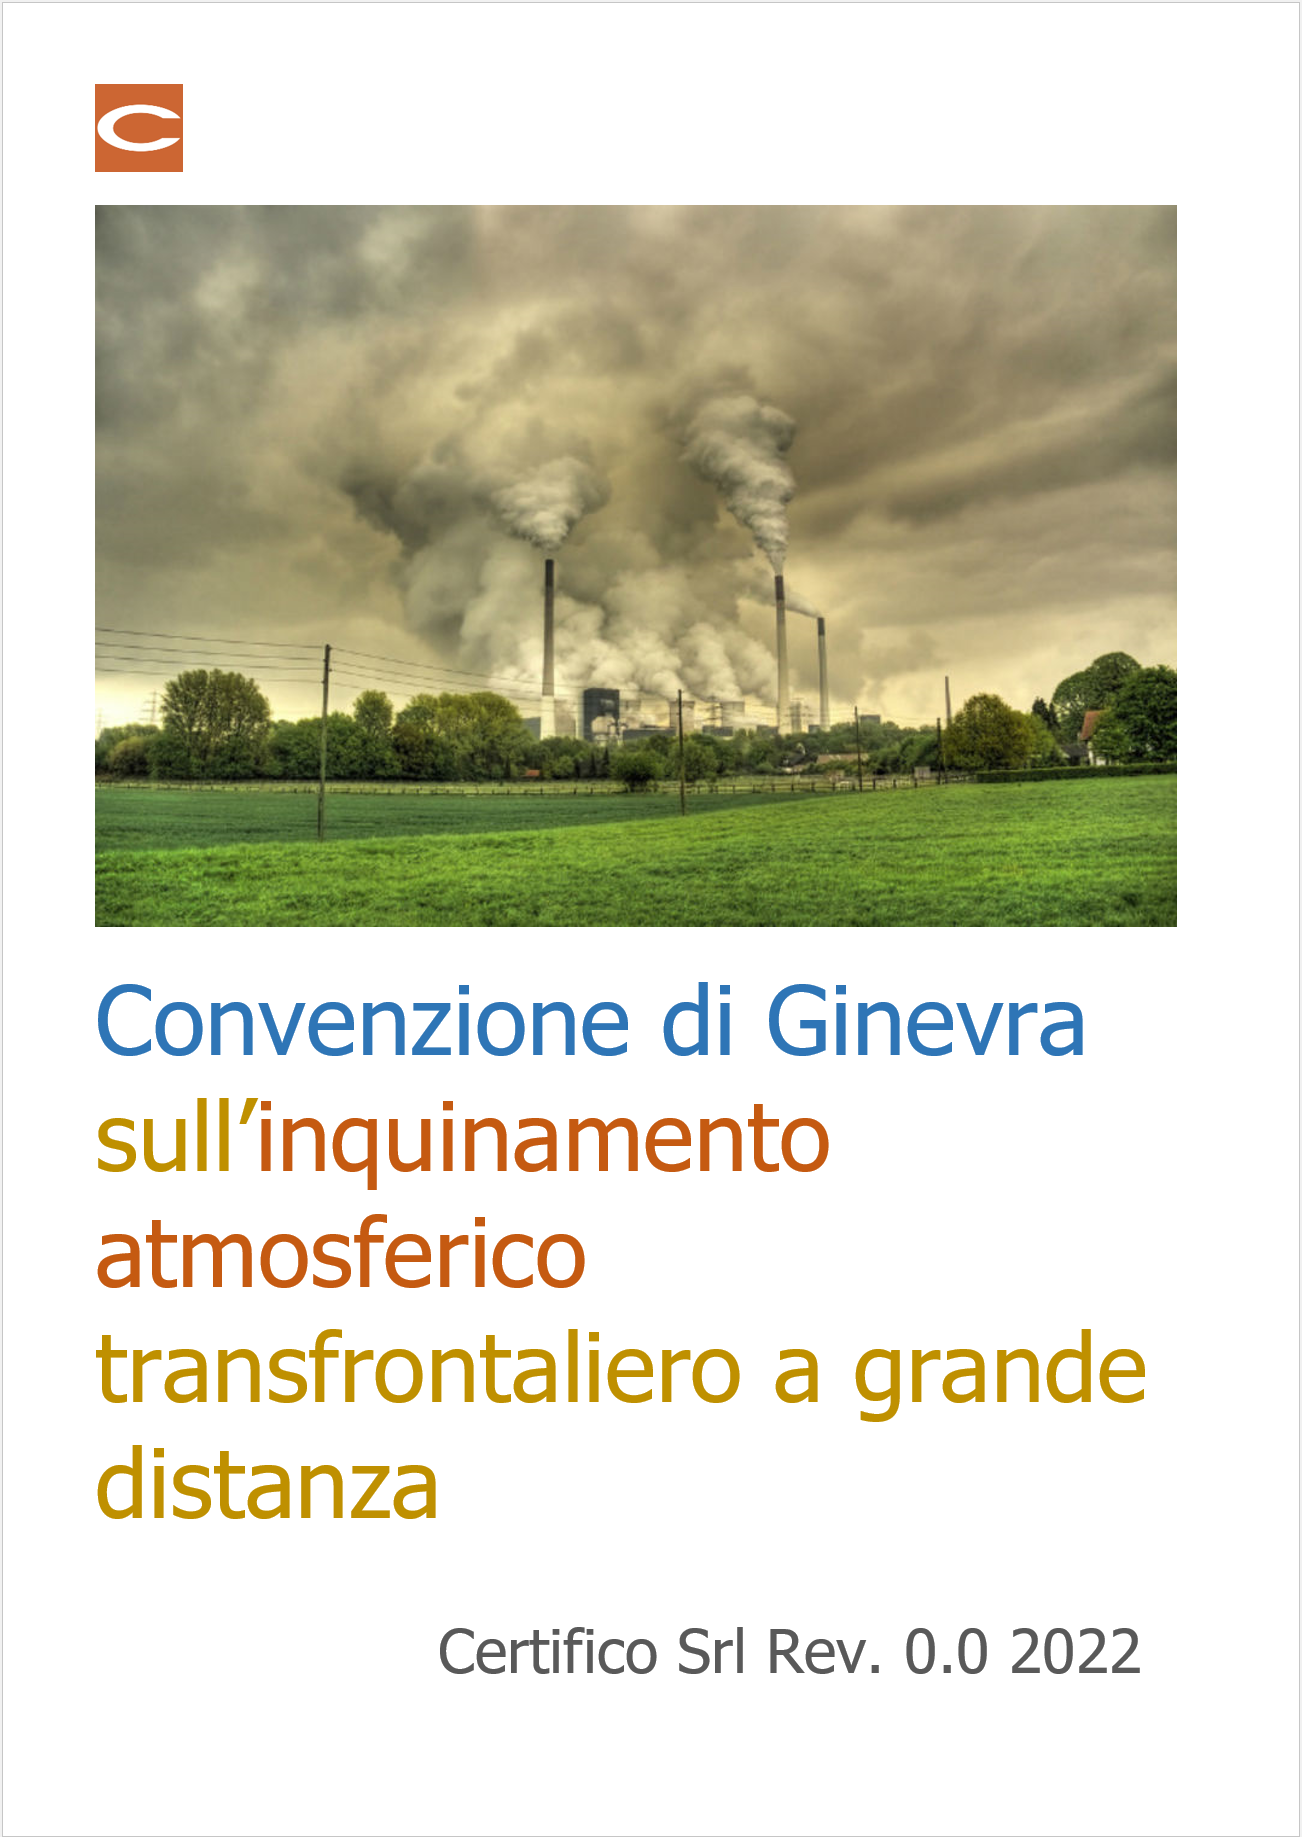 Convenzione di Ginevra   Rev  0 0 2022